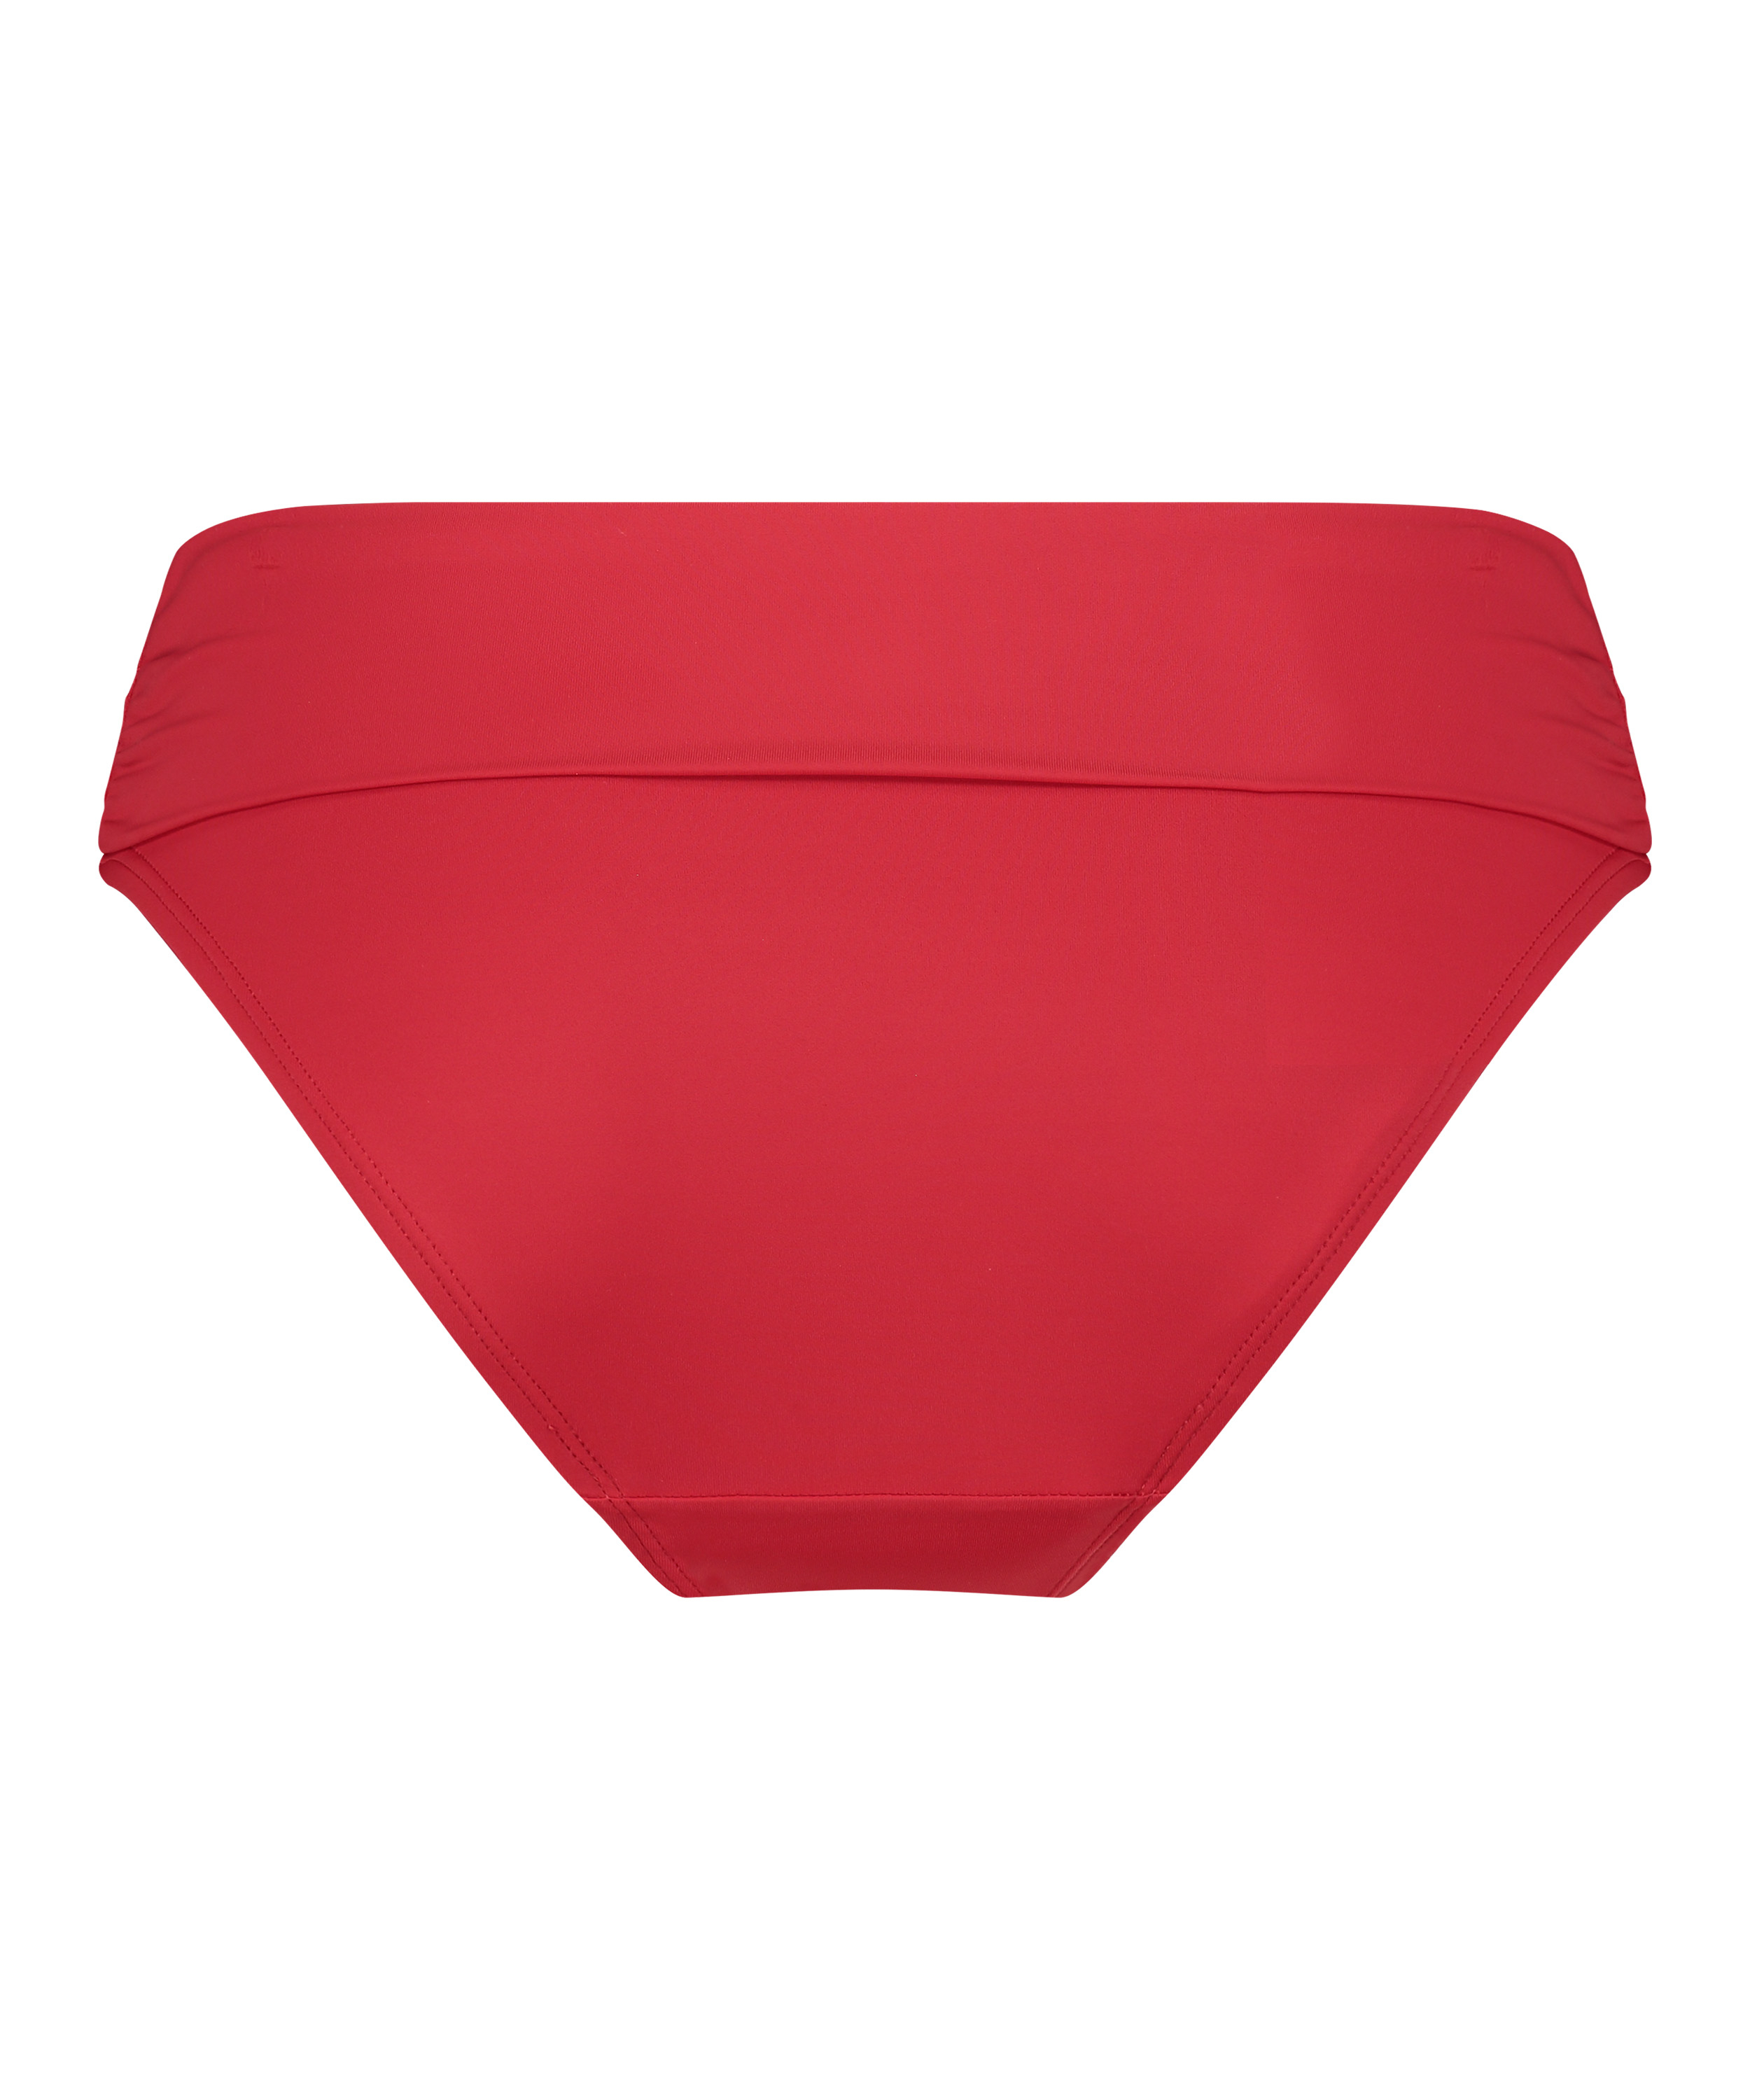 Rio Bikinitrusse Luxe, rød, main